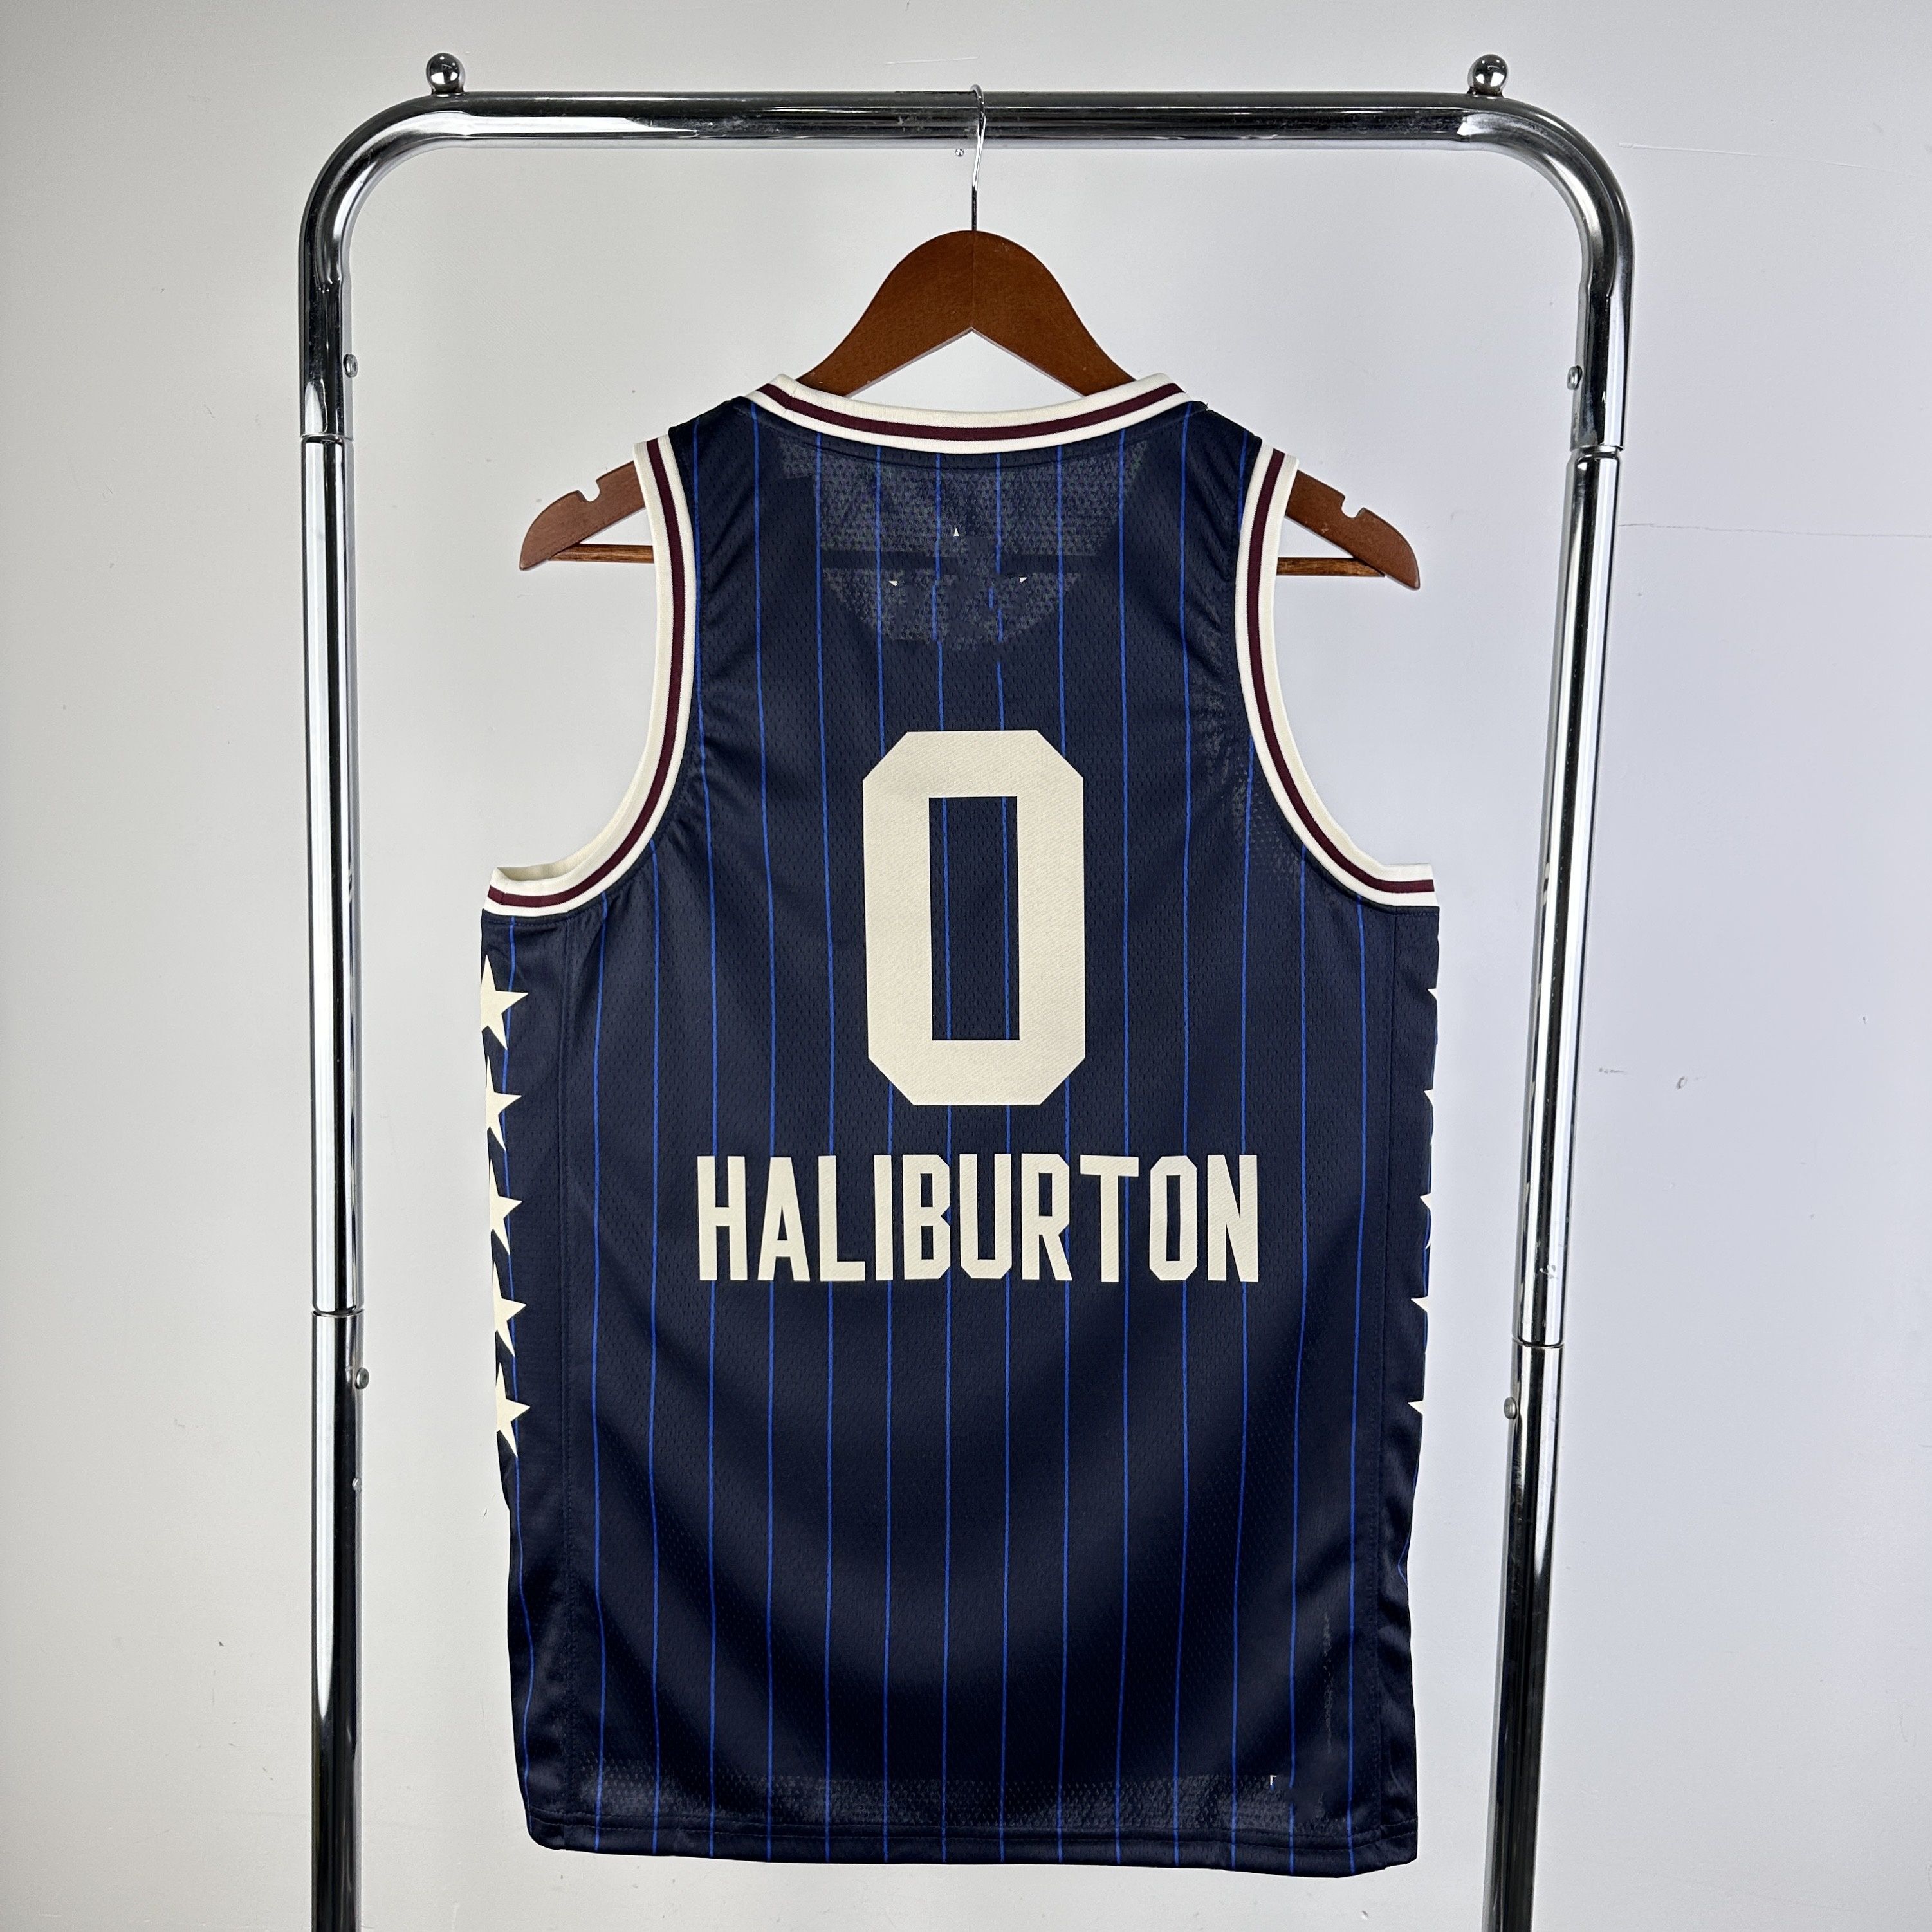 # 0 Haliburton